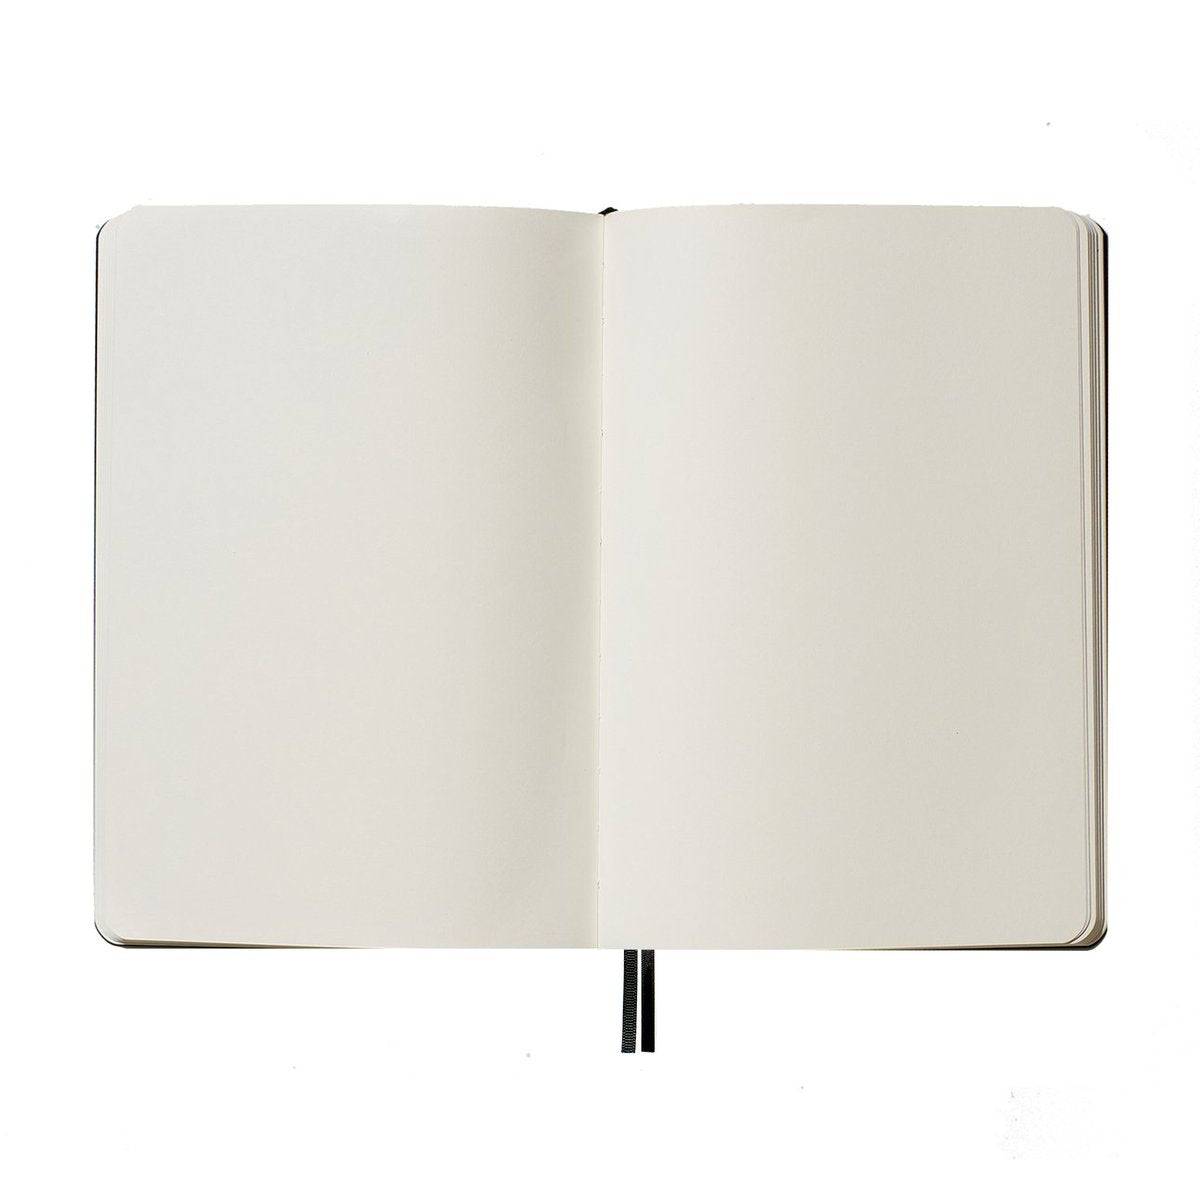 Bobby Clark x AOL A5 Blank Notebook No. 2